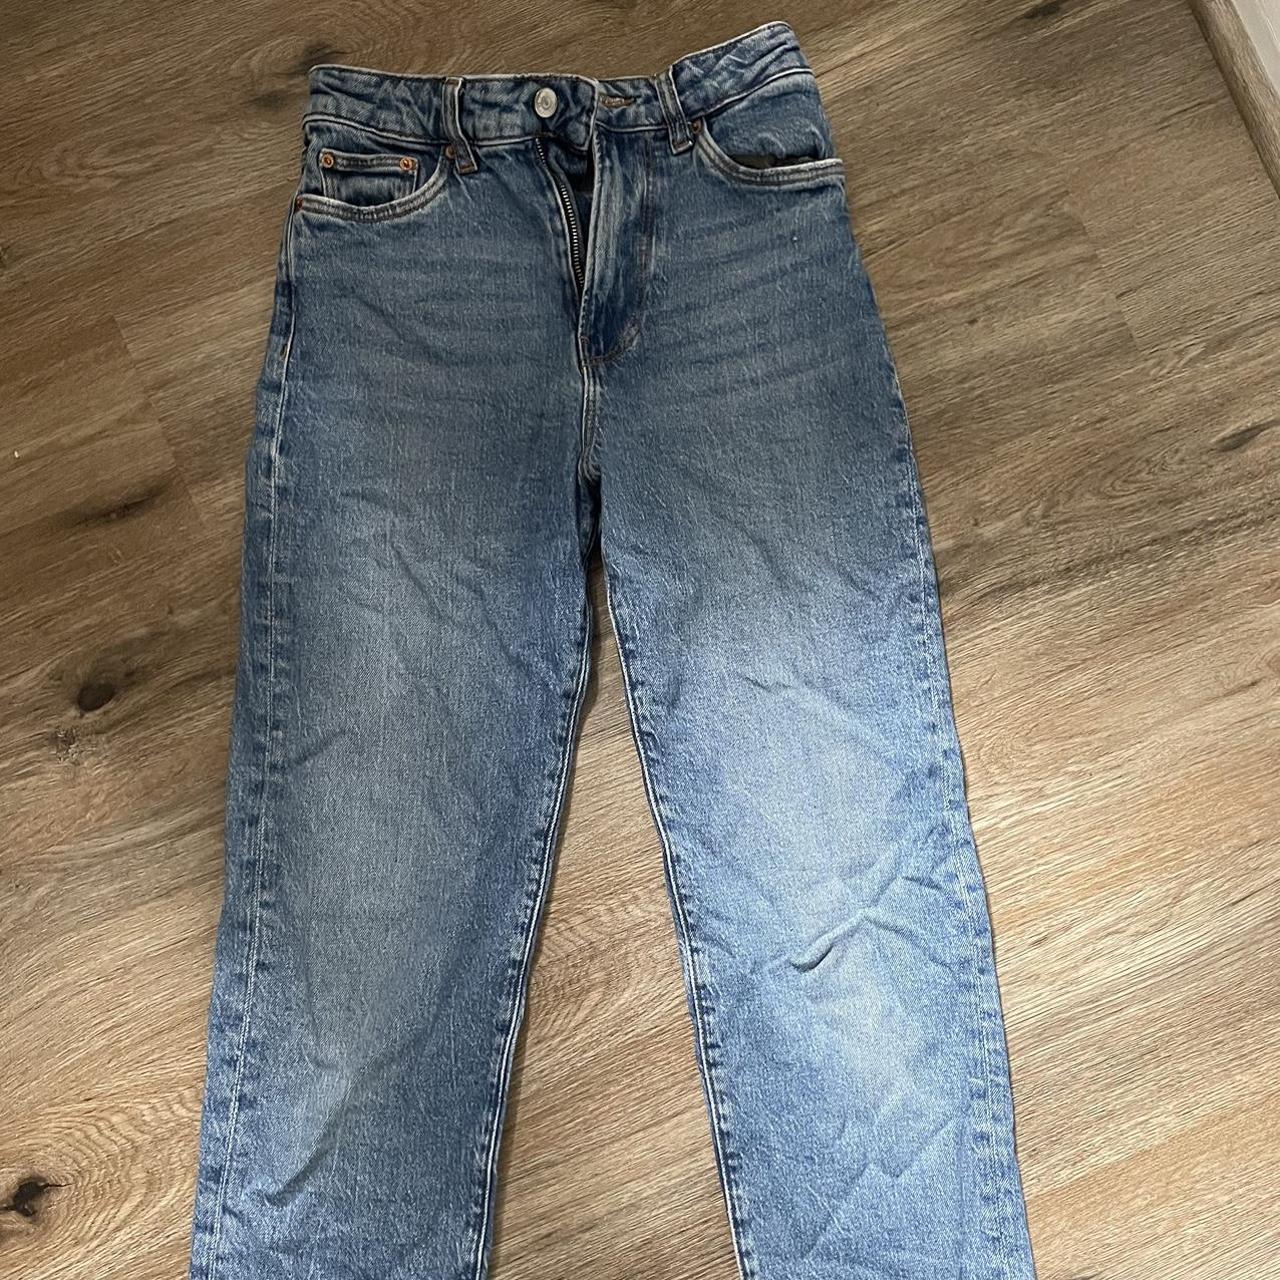 Medium wash jeans Straight leg medium rise Size 25... - Depop